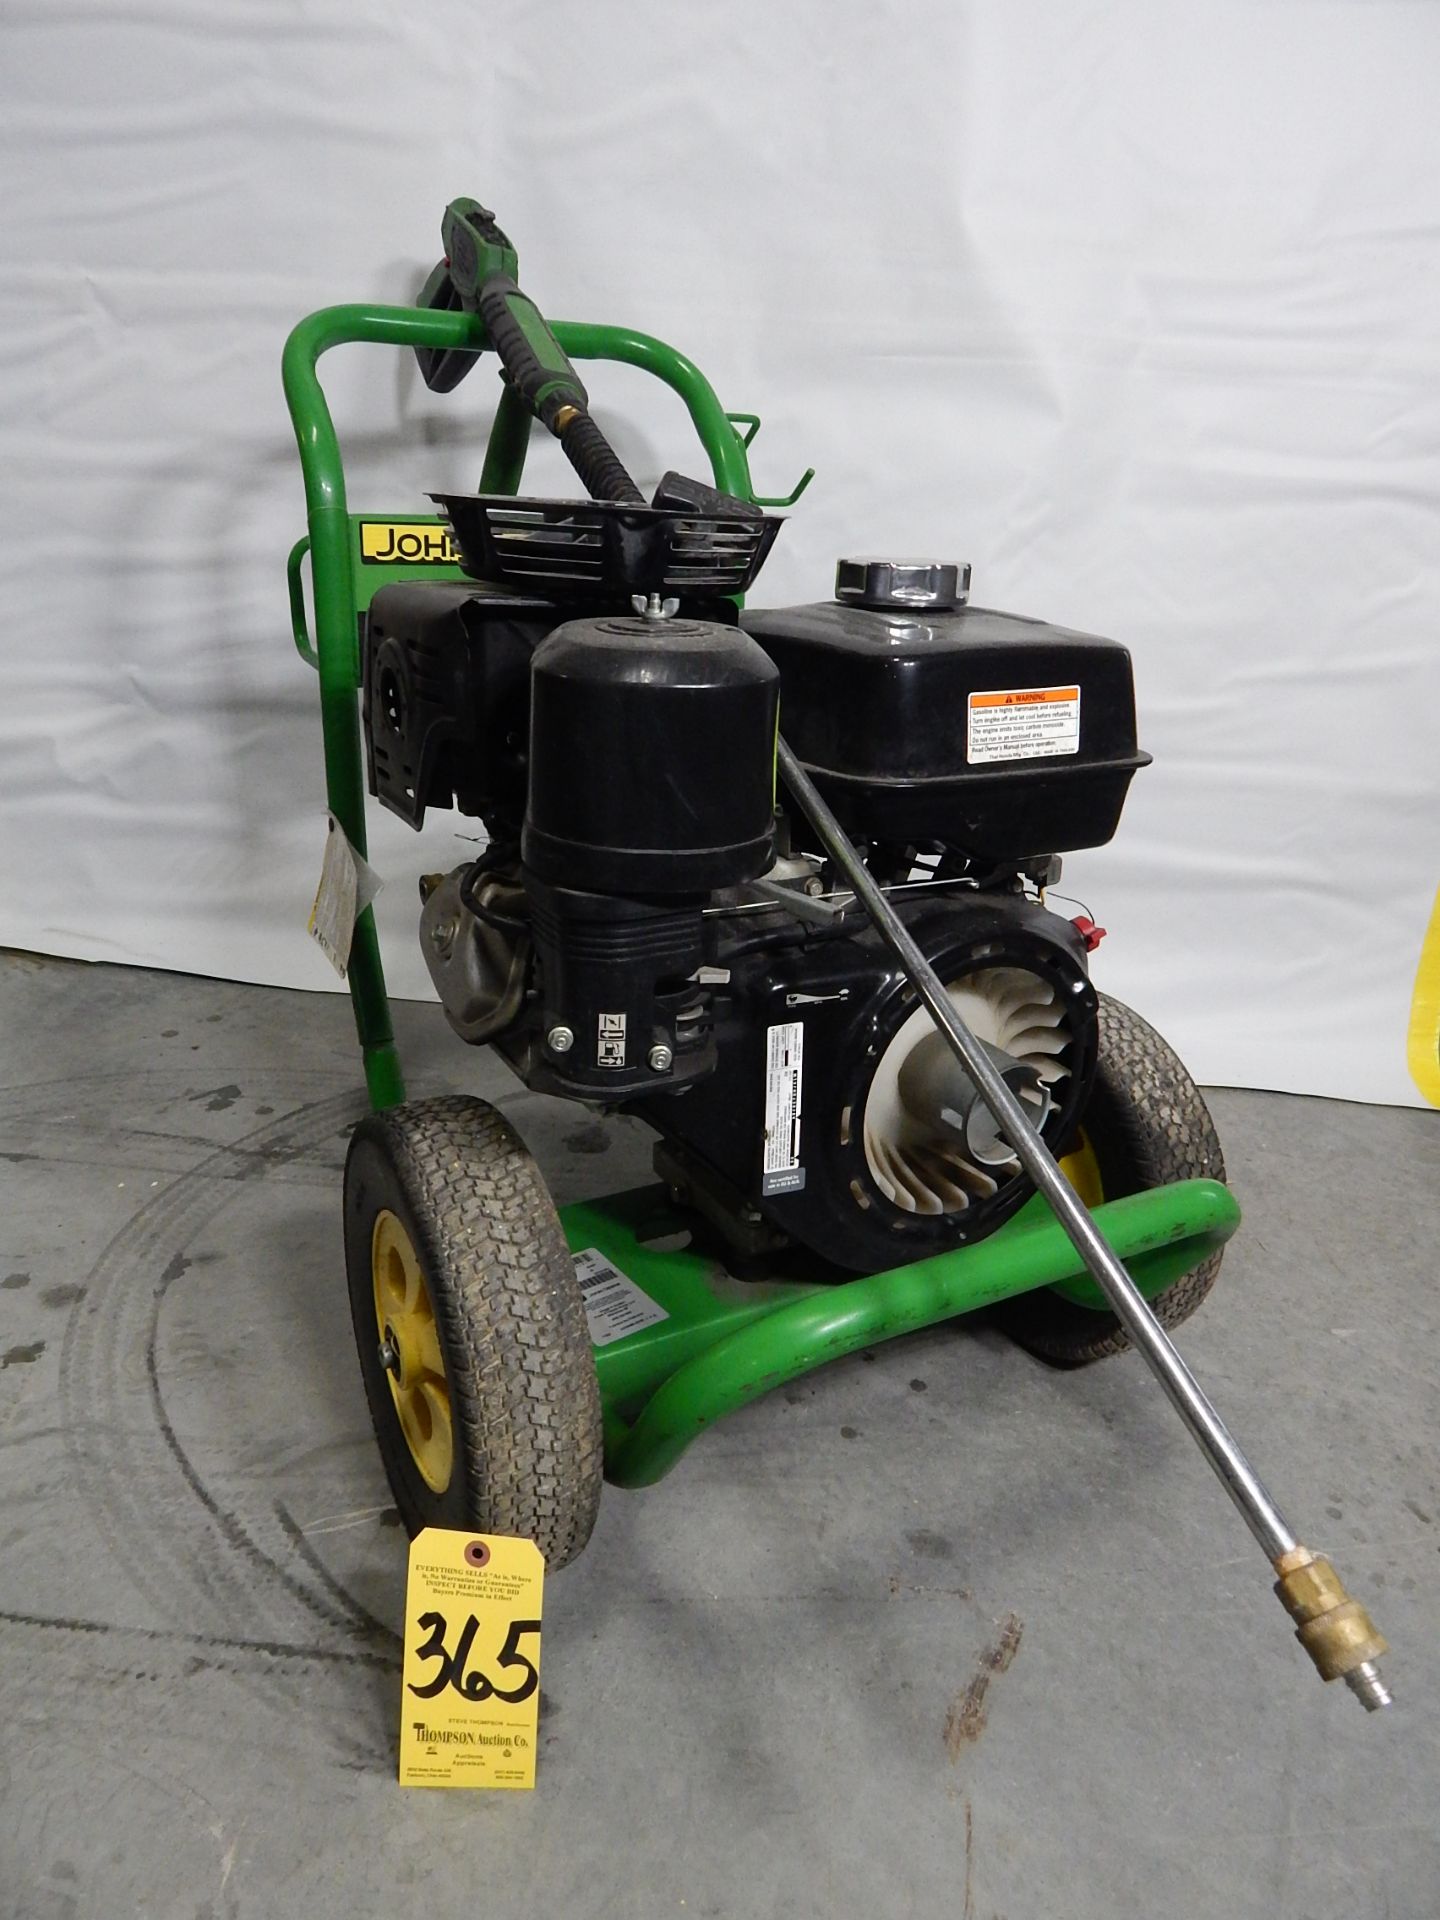 John Deere Gas-Powered Pressure Washer, 3800 PSI, 4.0 GPM, Need Repair